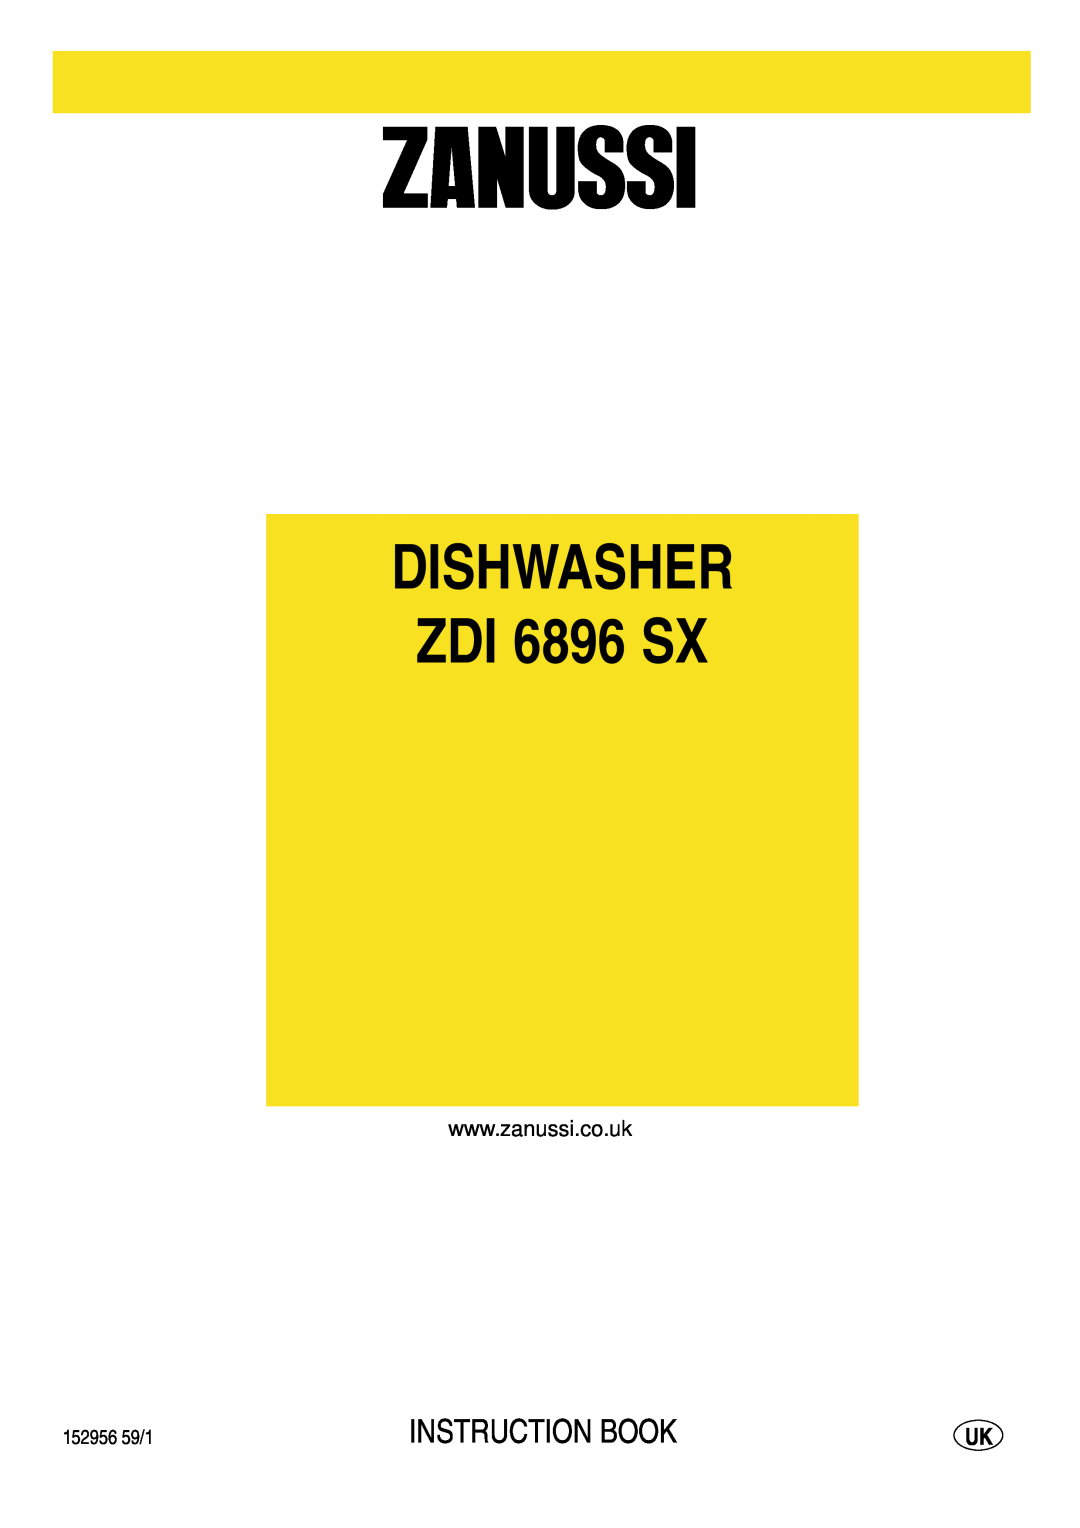 Zanussi manual DISHWASHER ZDI 6896 SX, Instruction Book 